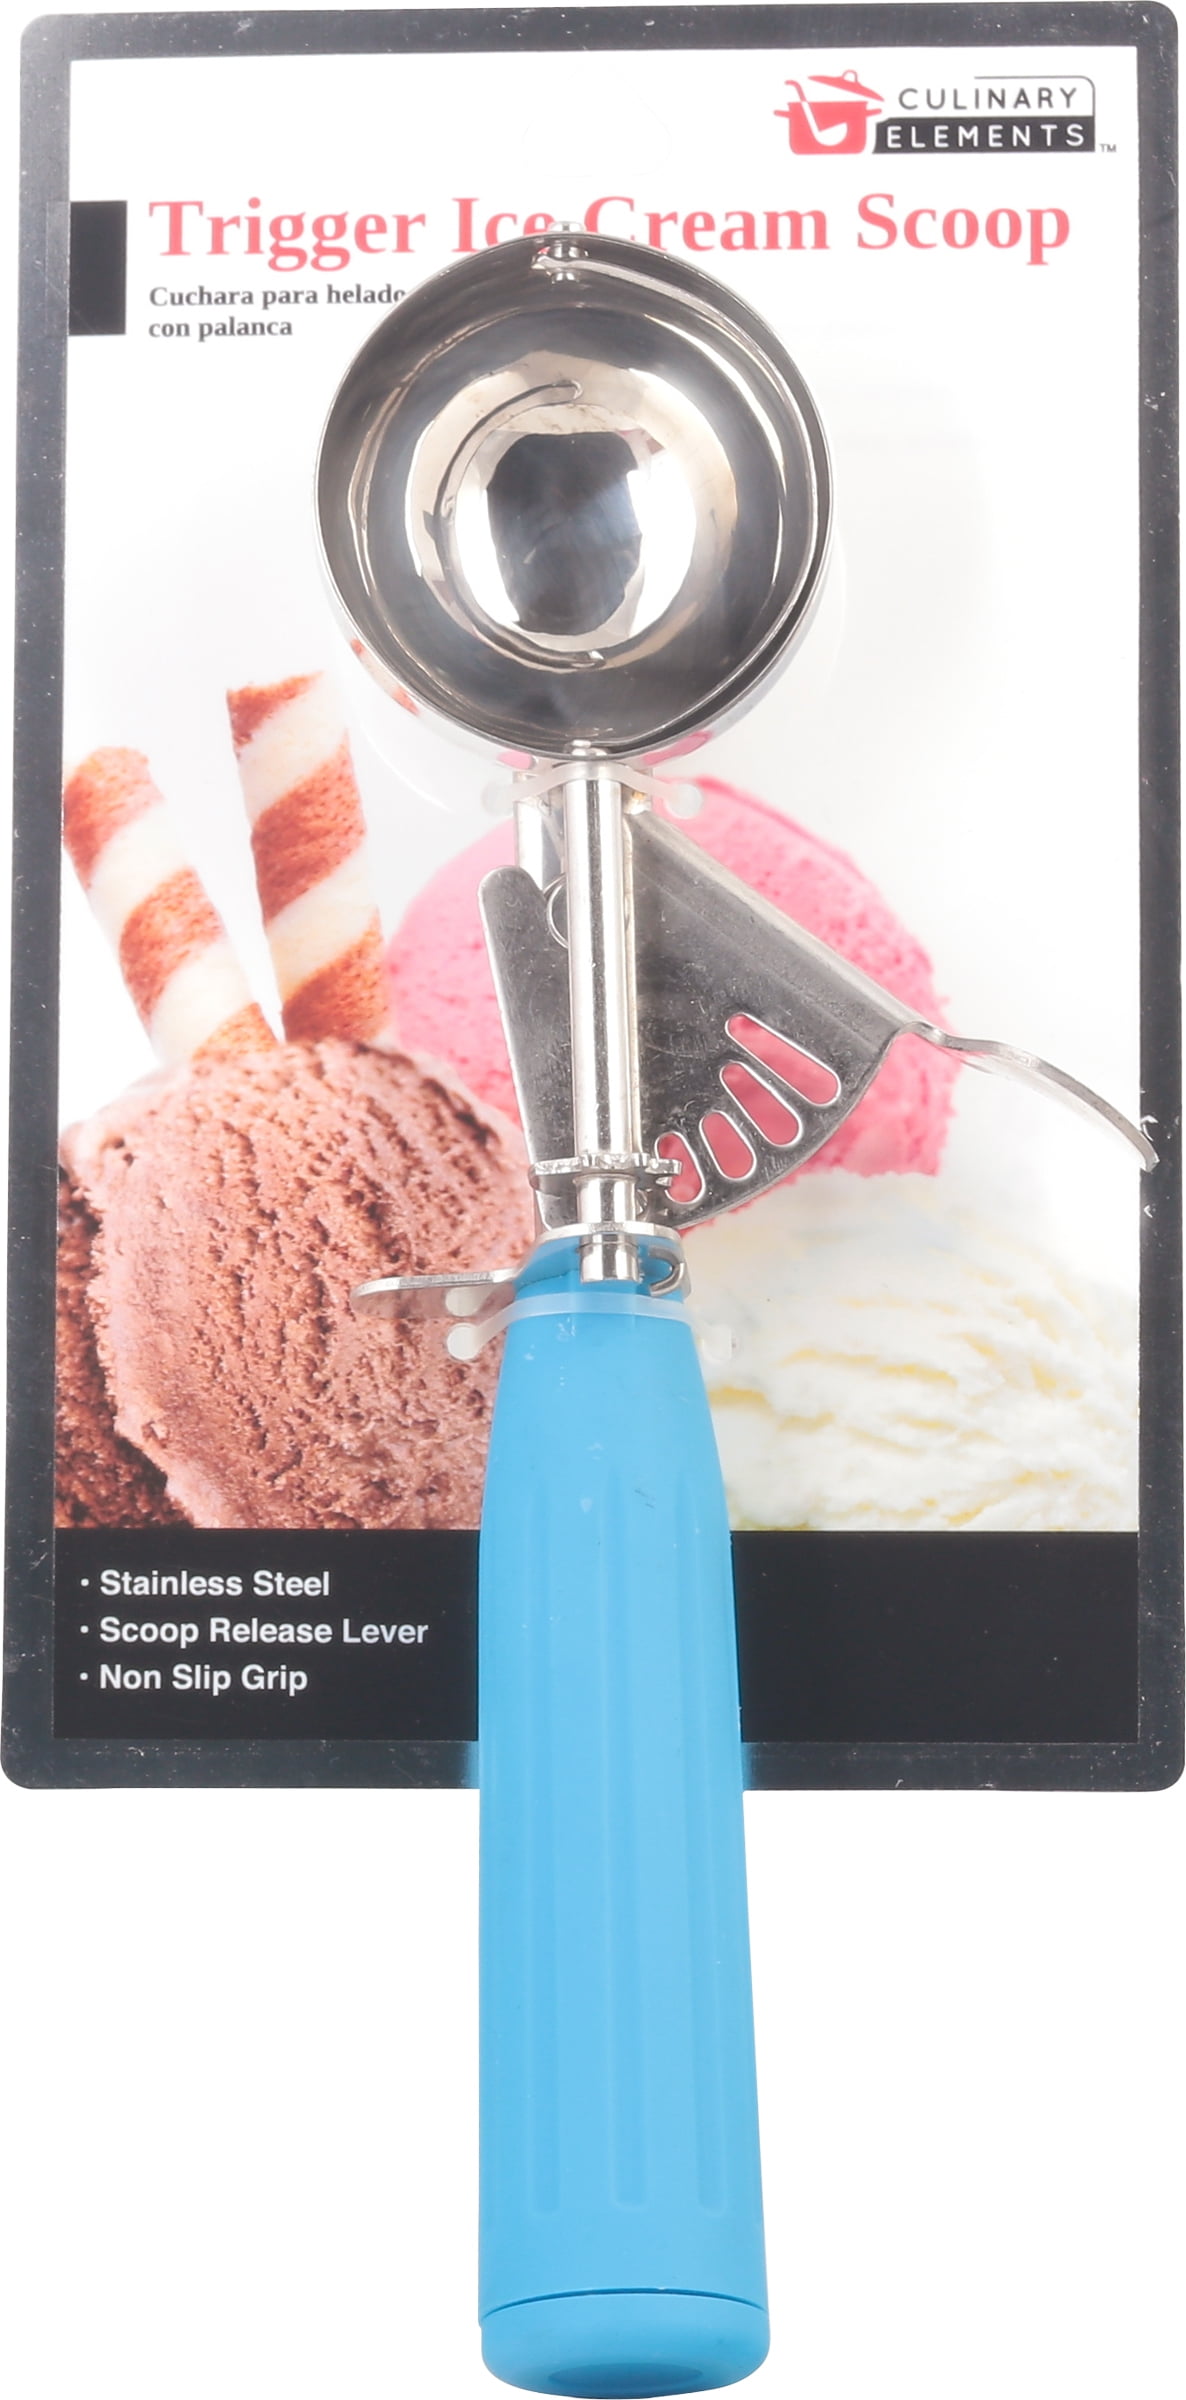 Trigger Ice Cream Scoop - Innovative Culinary Tools 